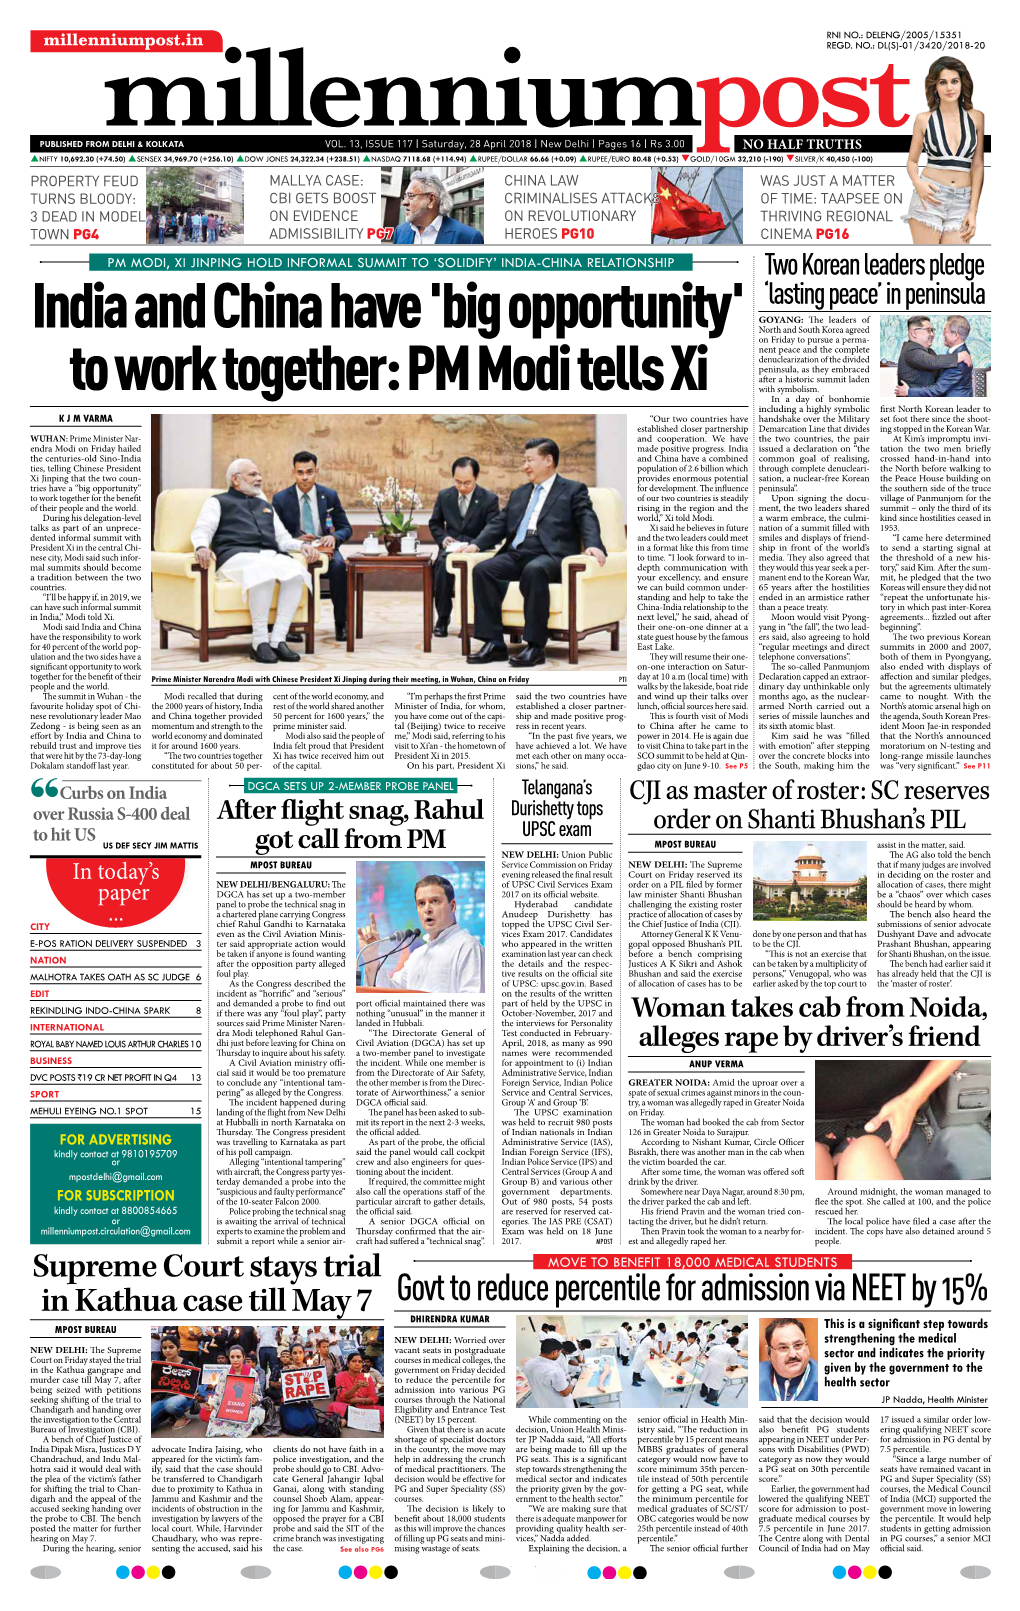 PM Modi Tells Xi with Symbolism